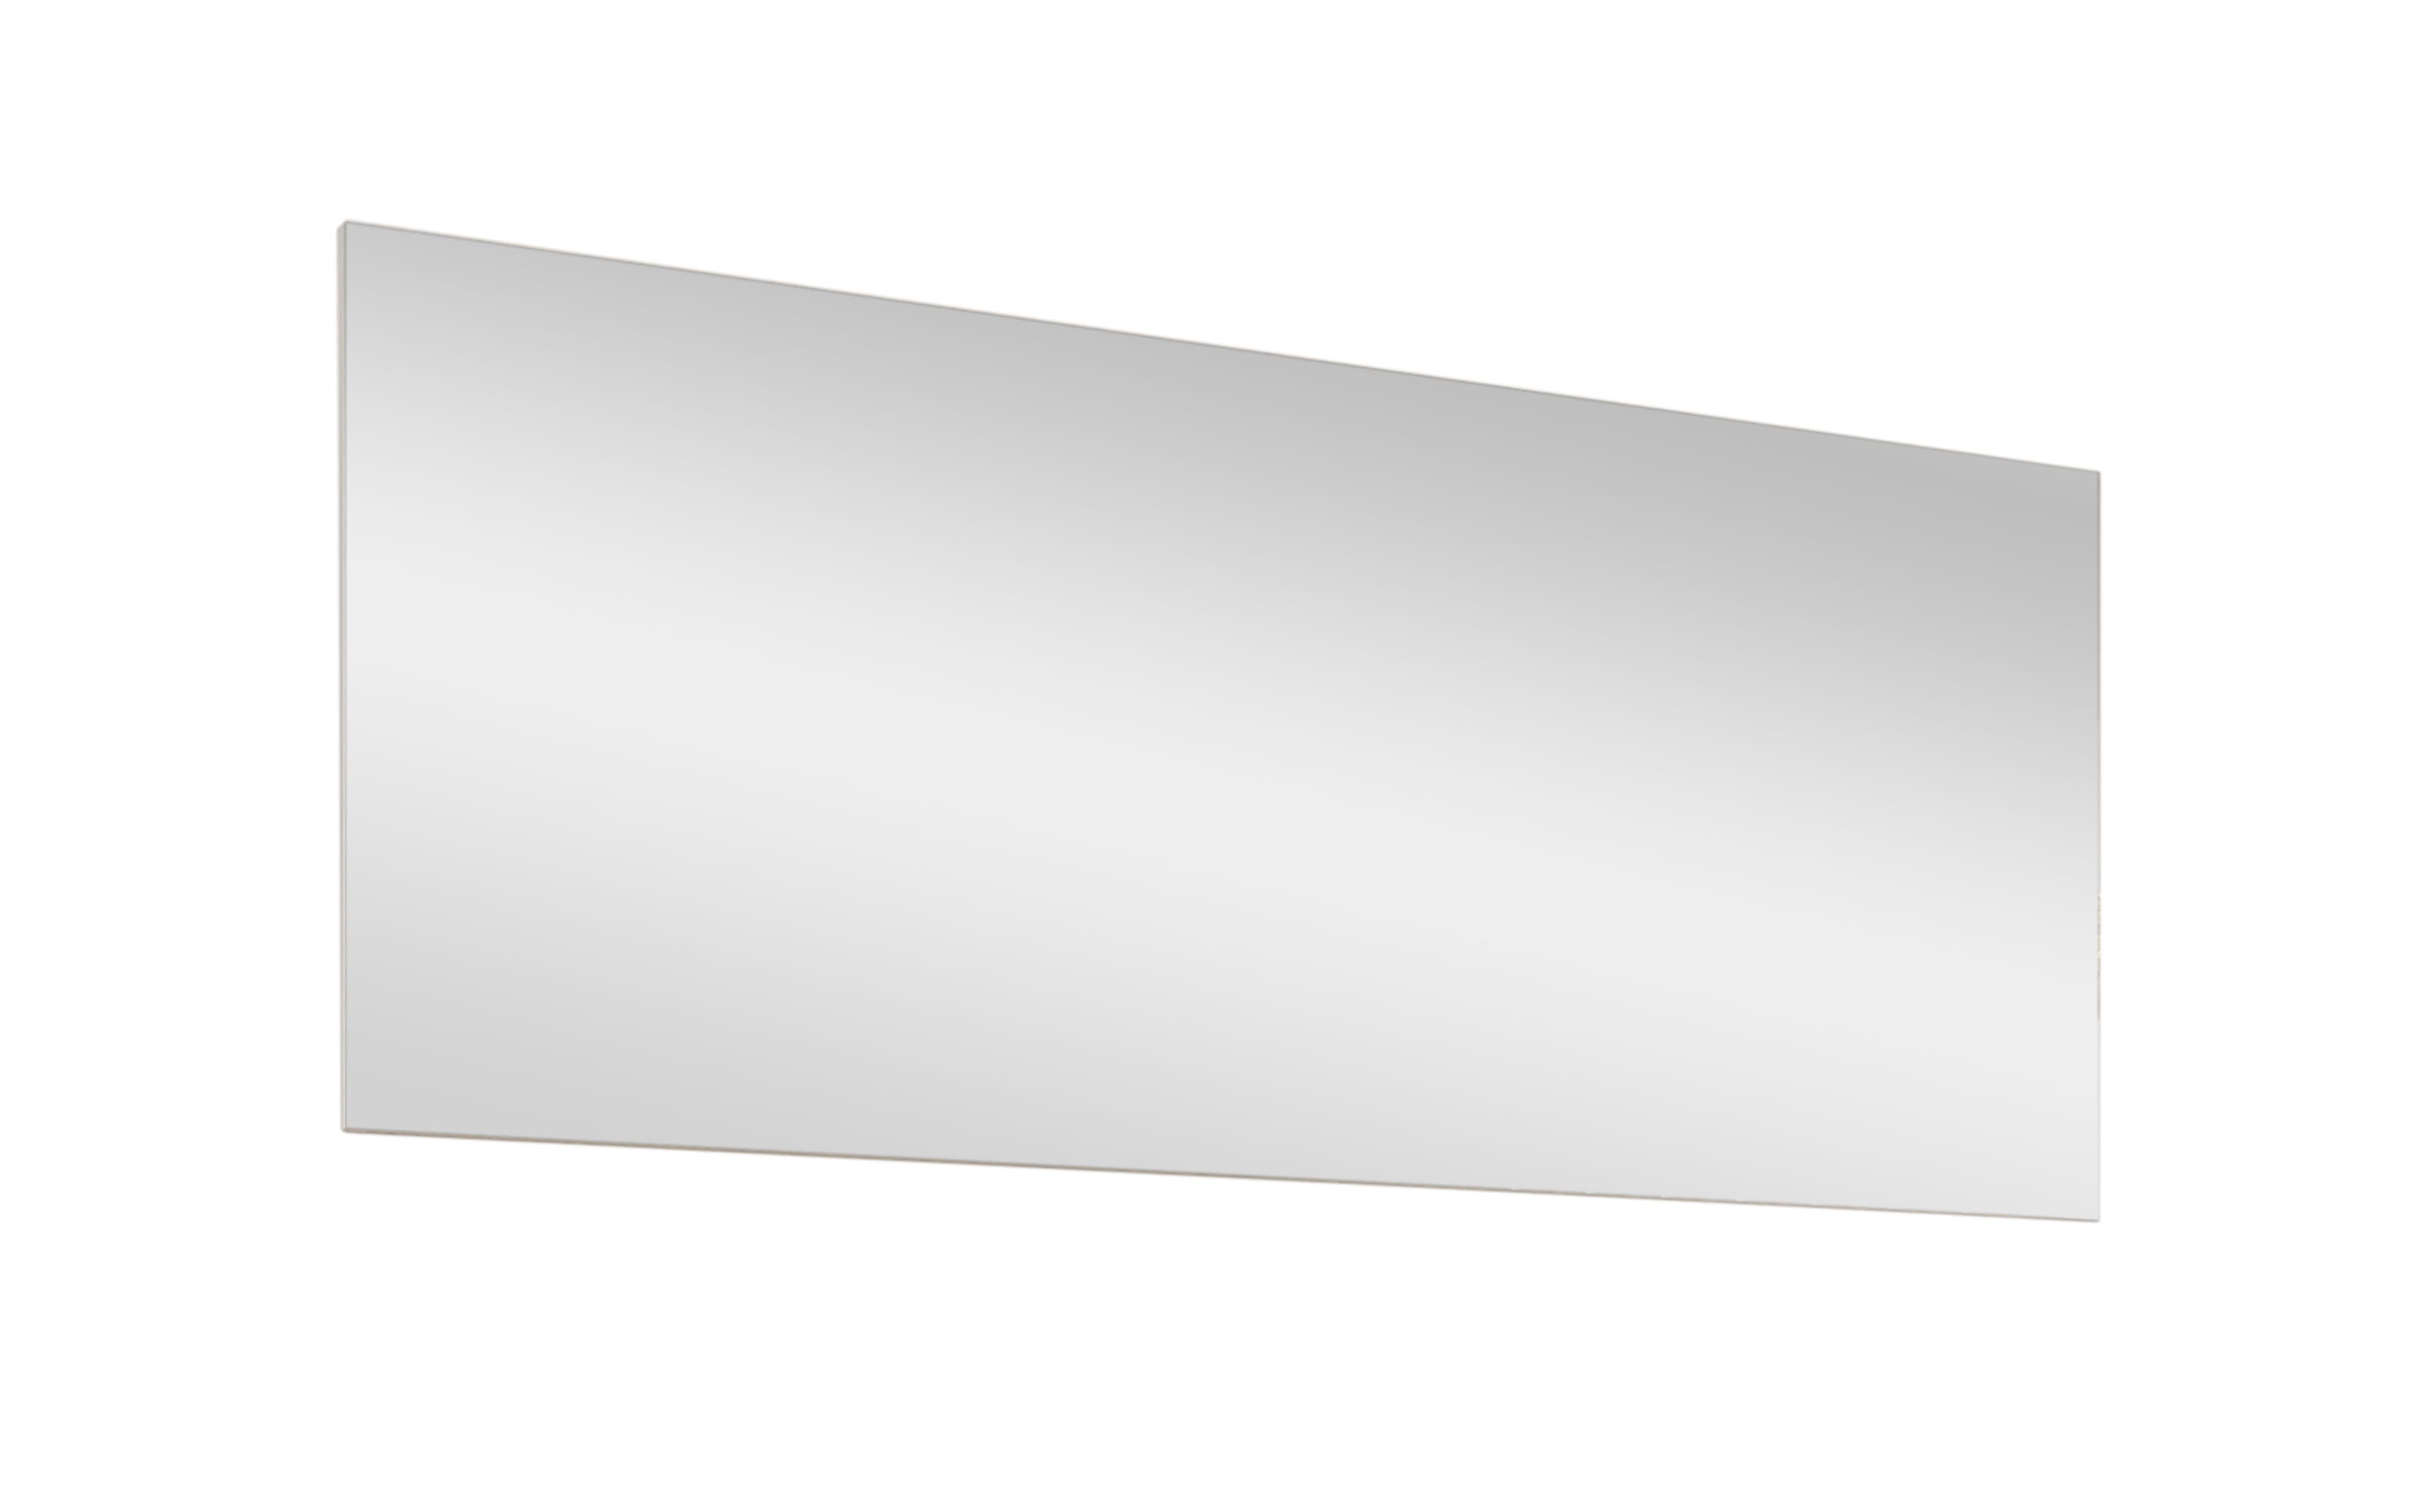 Spiegel Solino, grau, 140 x 60 cm 